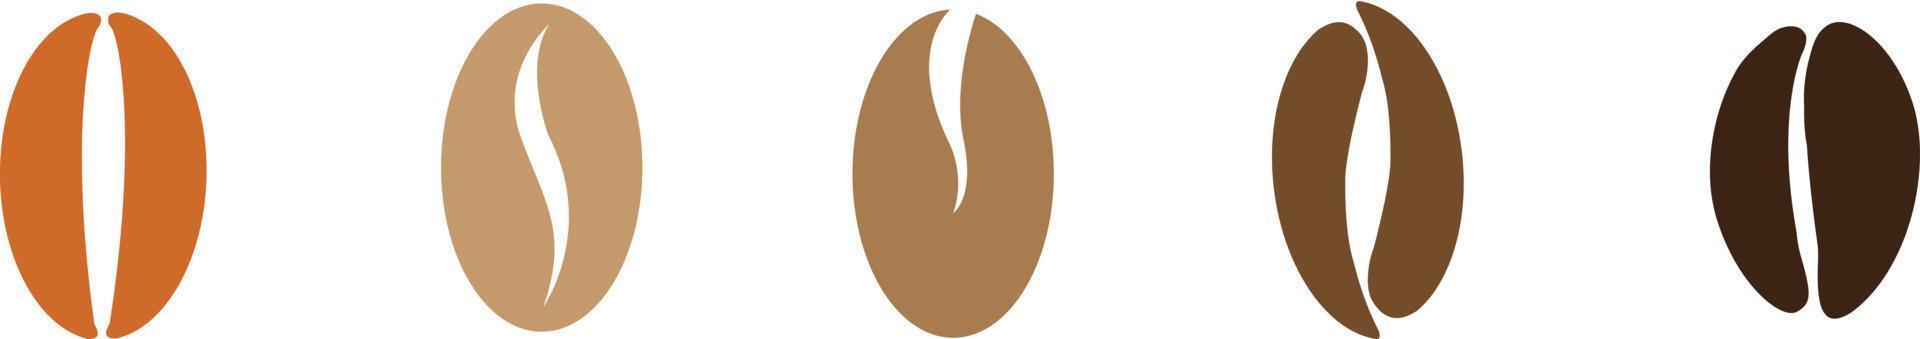 coffee beans Logo Template design vector icons